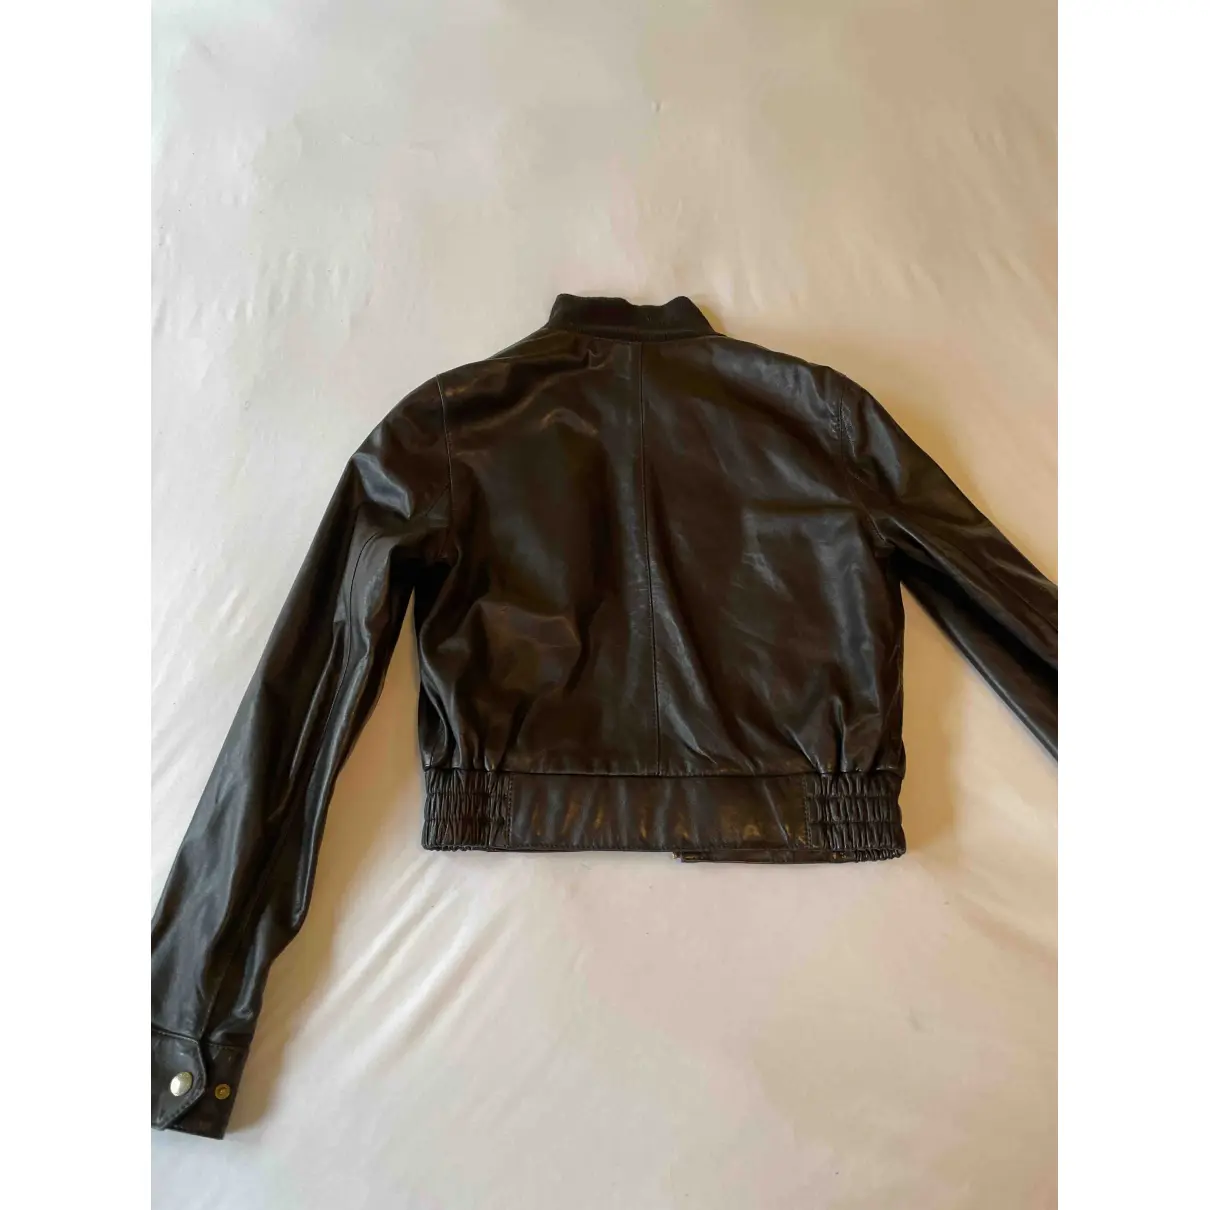 Buy Hugo Boss Leather biker jacket online